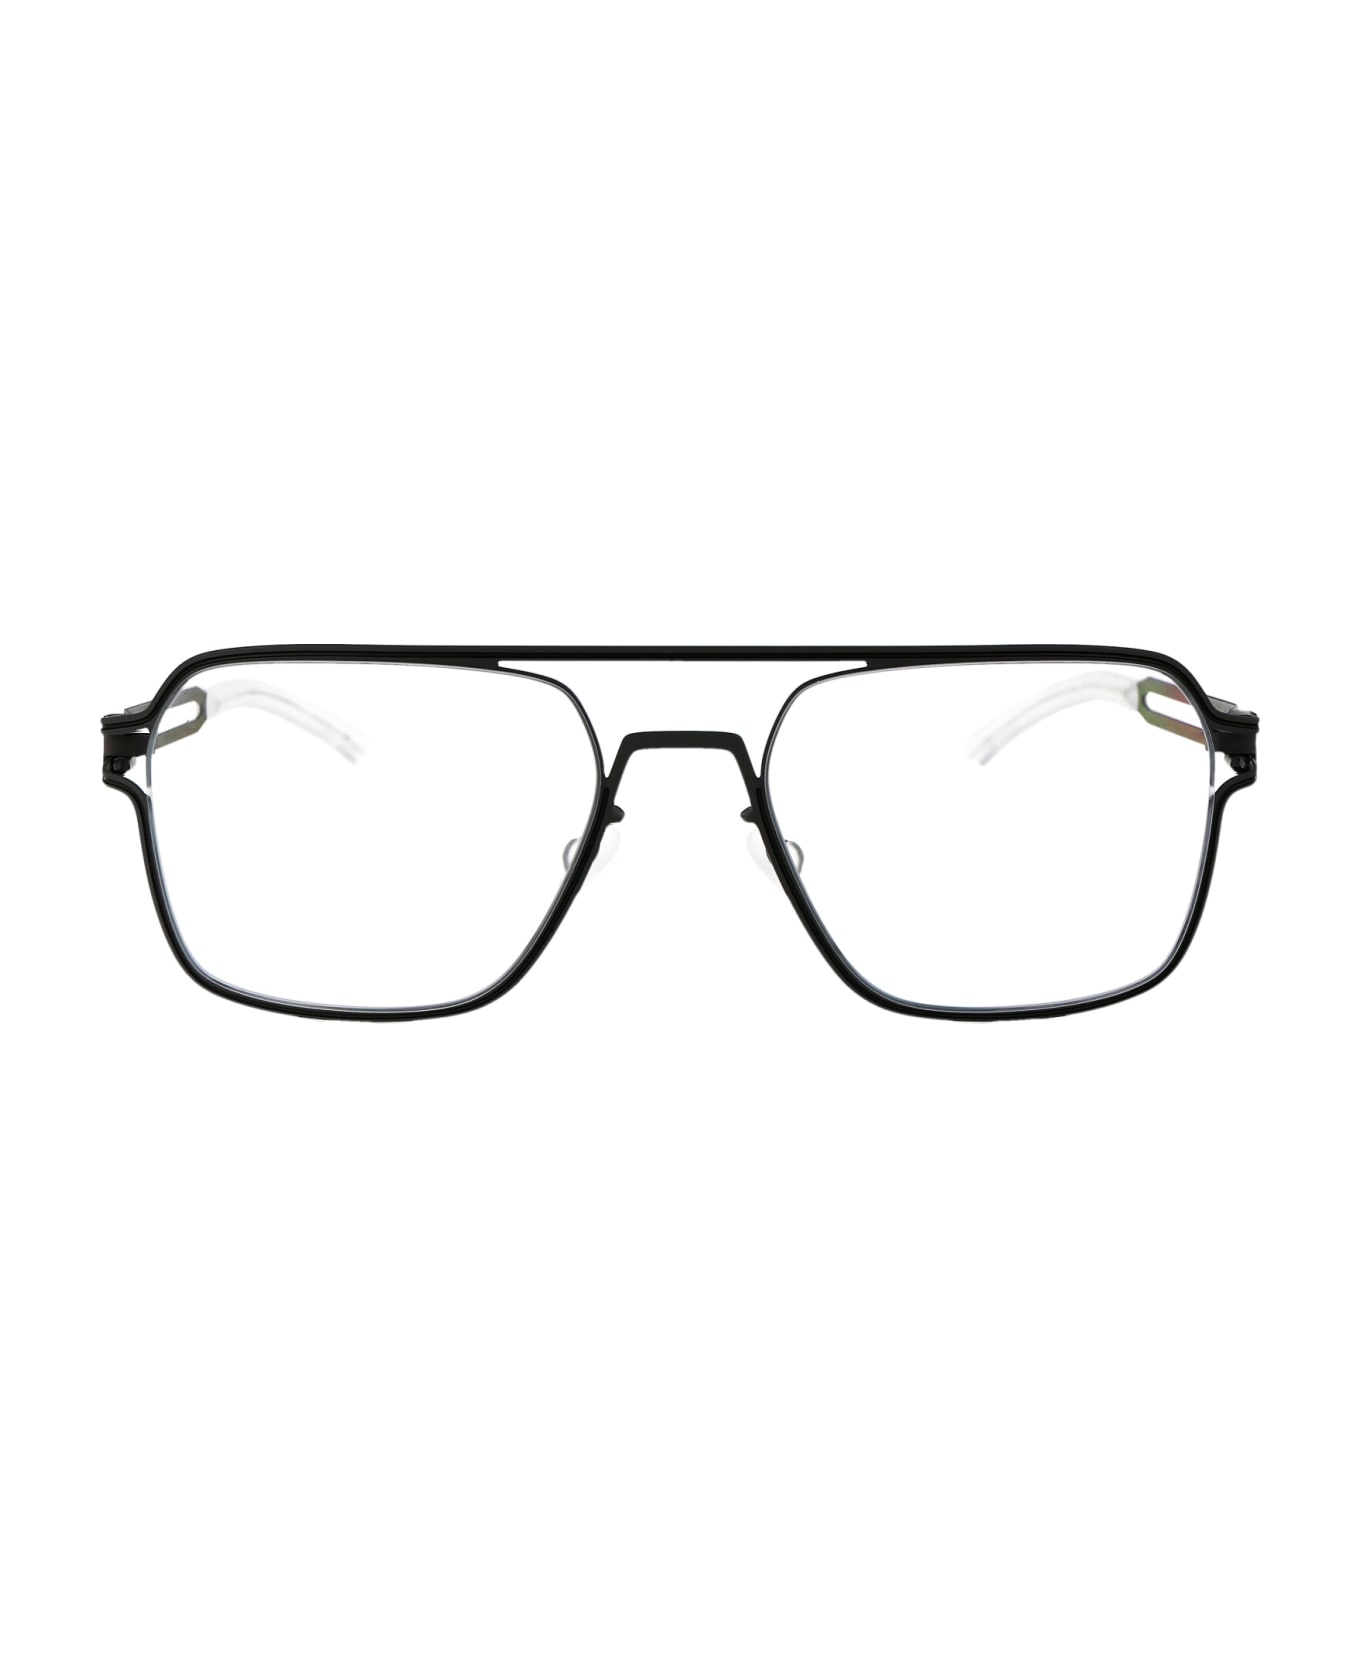 Mykita Jalo Glasses - 515 Storm Grey/Black Clear アイウェア